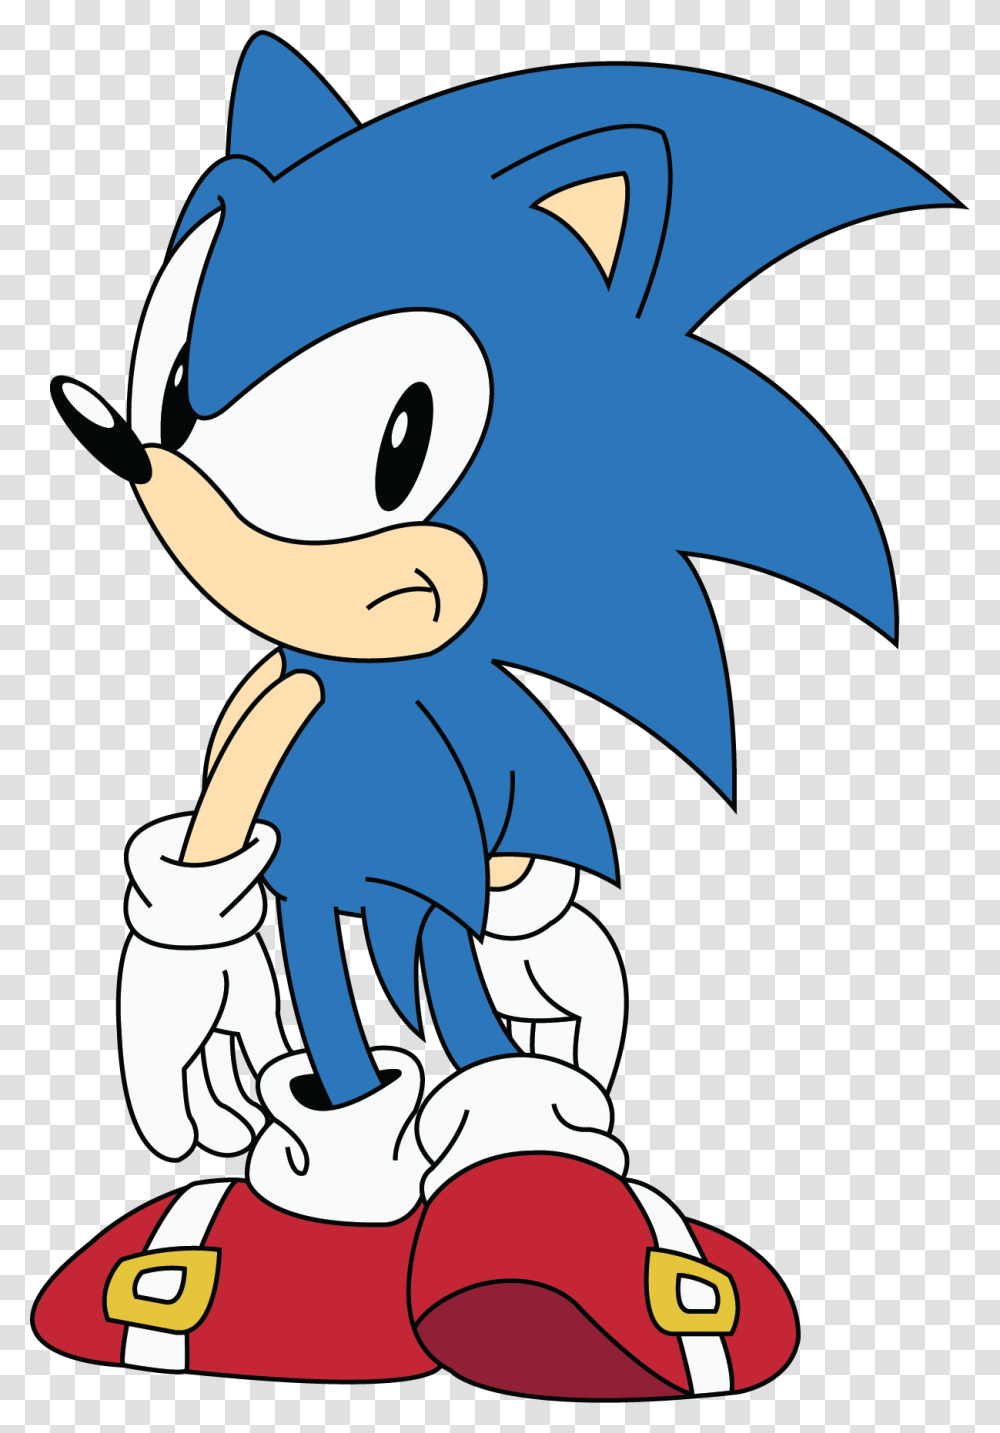 Classic Sonic The Hedgehog Artwork, Apparel, Mascot Transparent Png